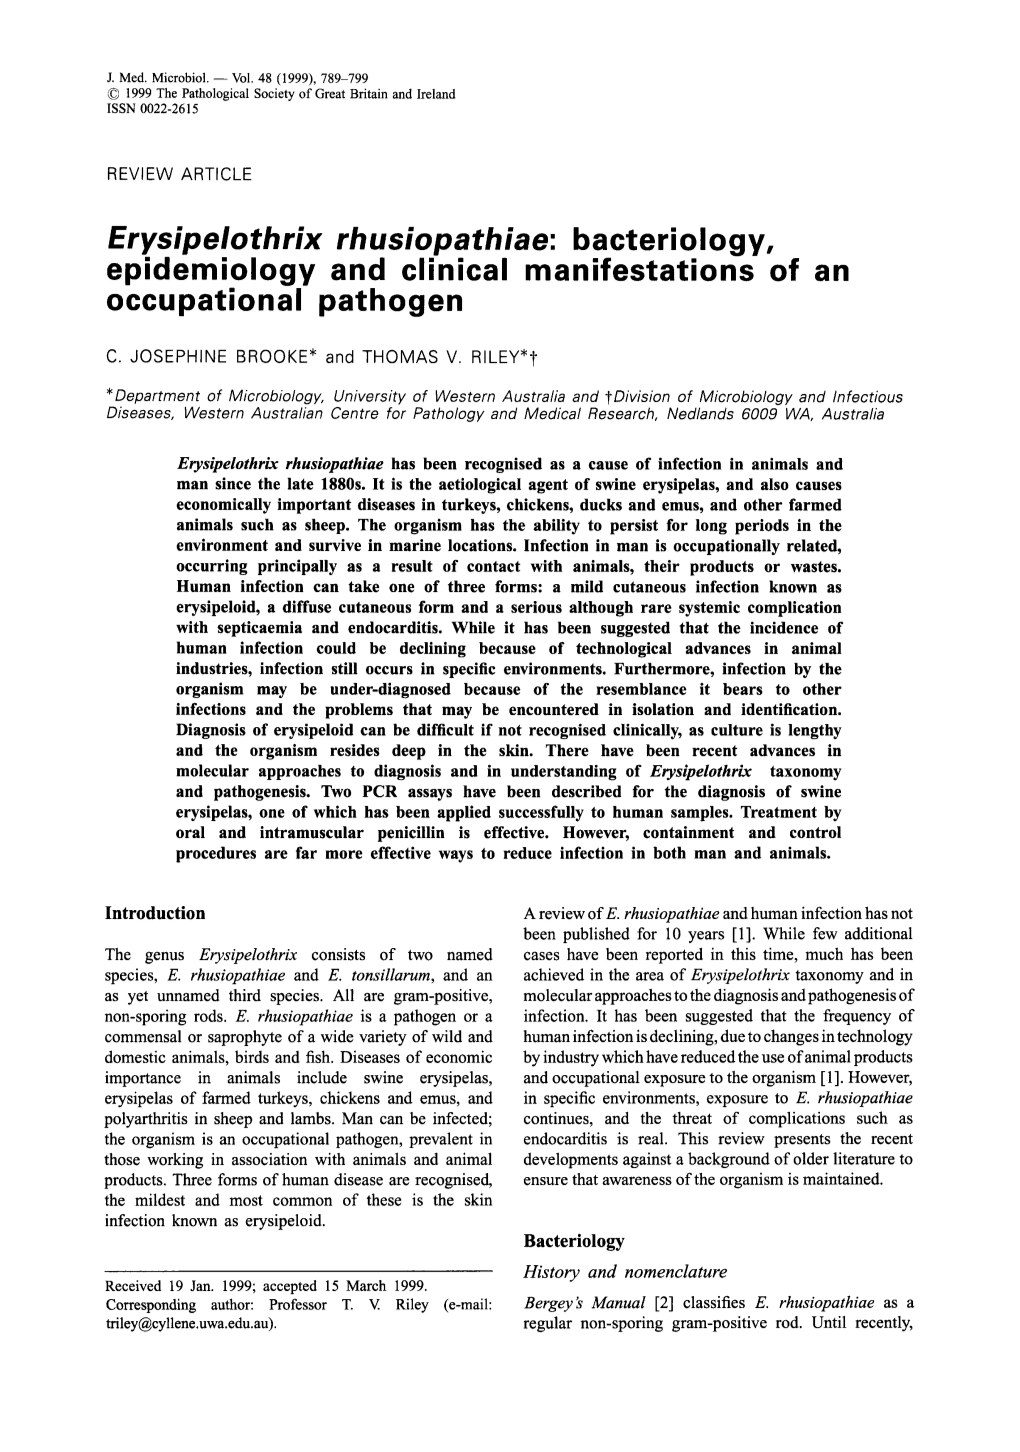 Erysipelothrix Rhusiopathiae: Bacteriology, Epidemiology and Clinical Manifestations of an Occupational Pathogen